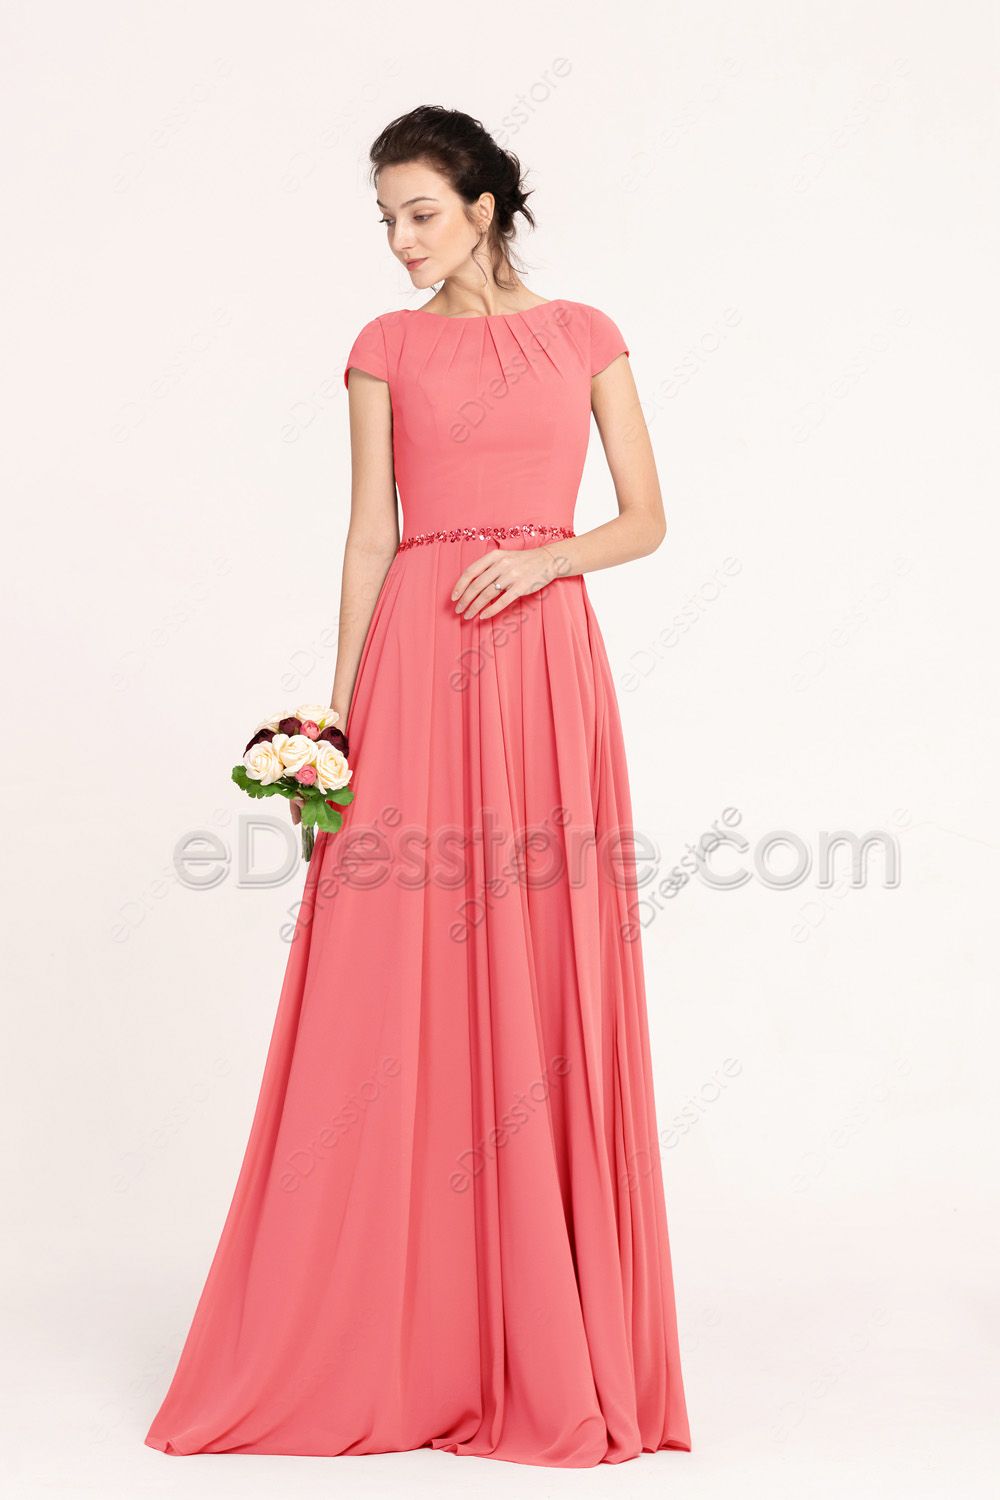 Coral Modest Prom Dresses Cap Sleeves | eDresstore